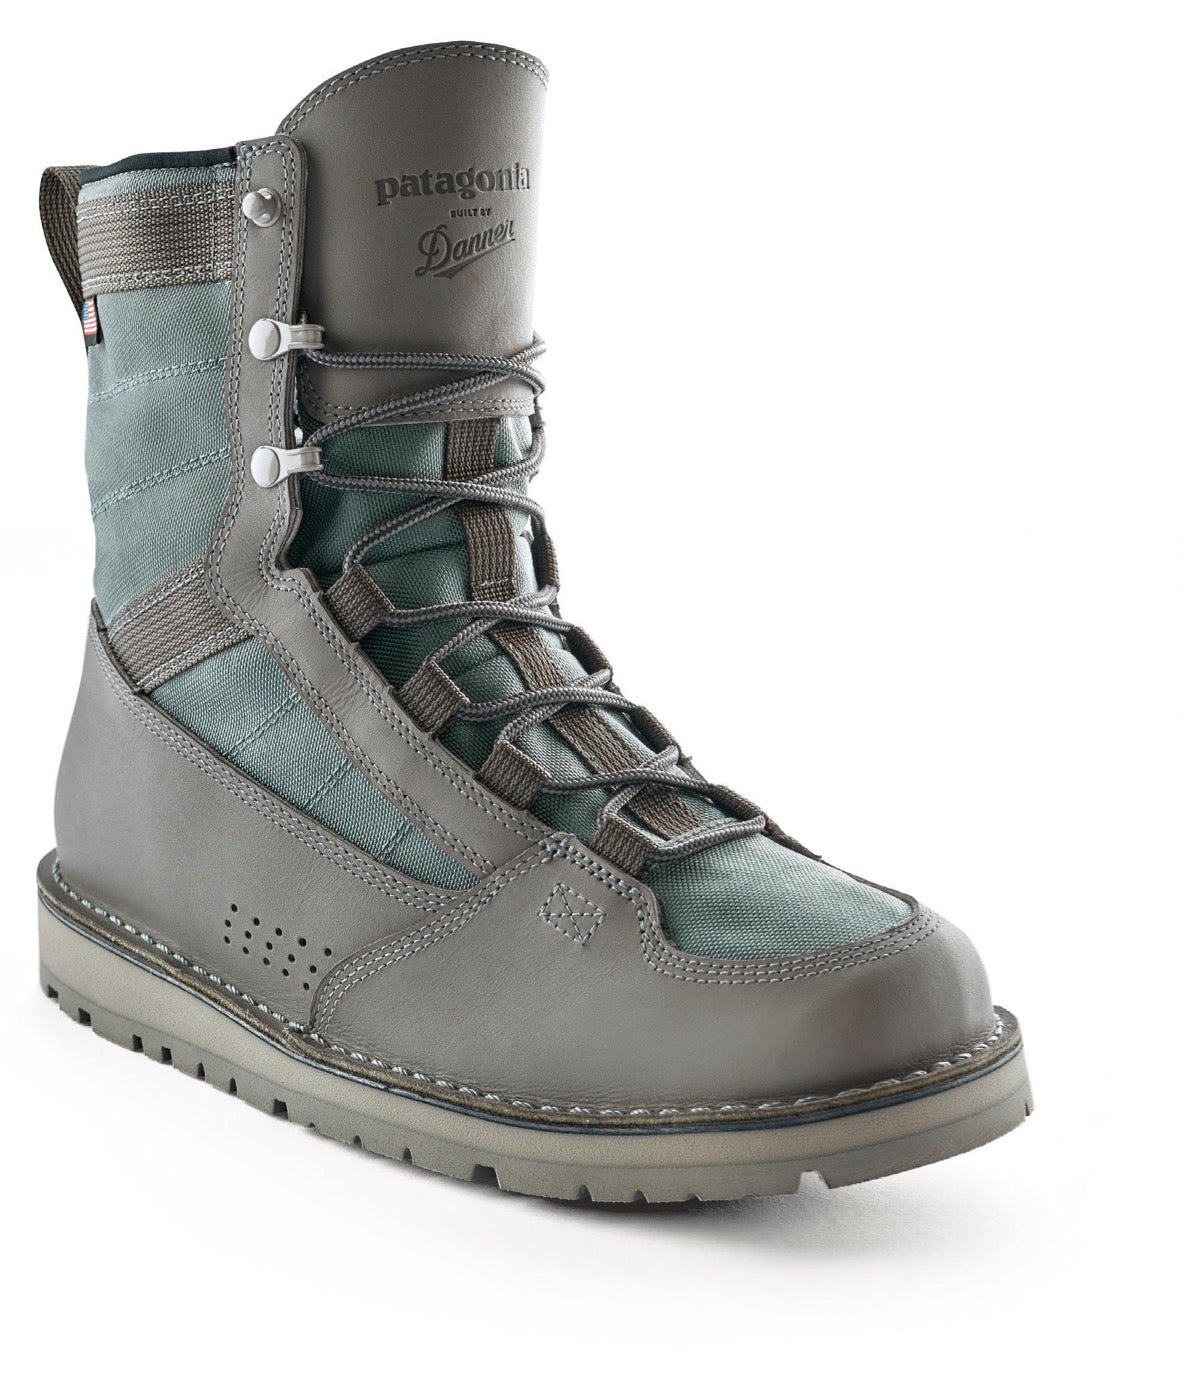 Patagonia Footwear - Danner River Salt Wading Boots